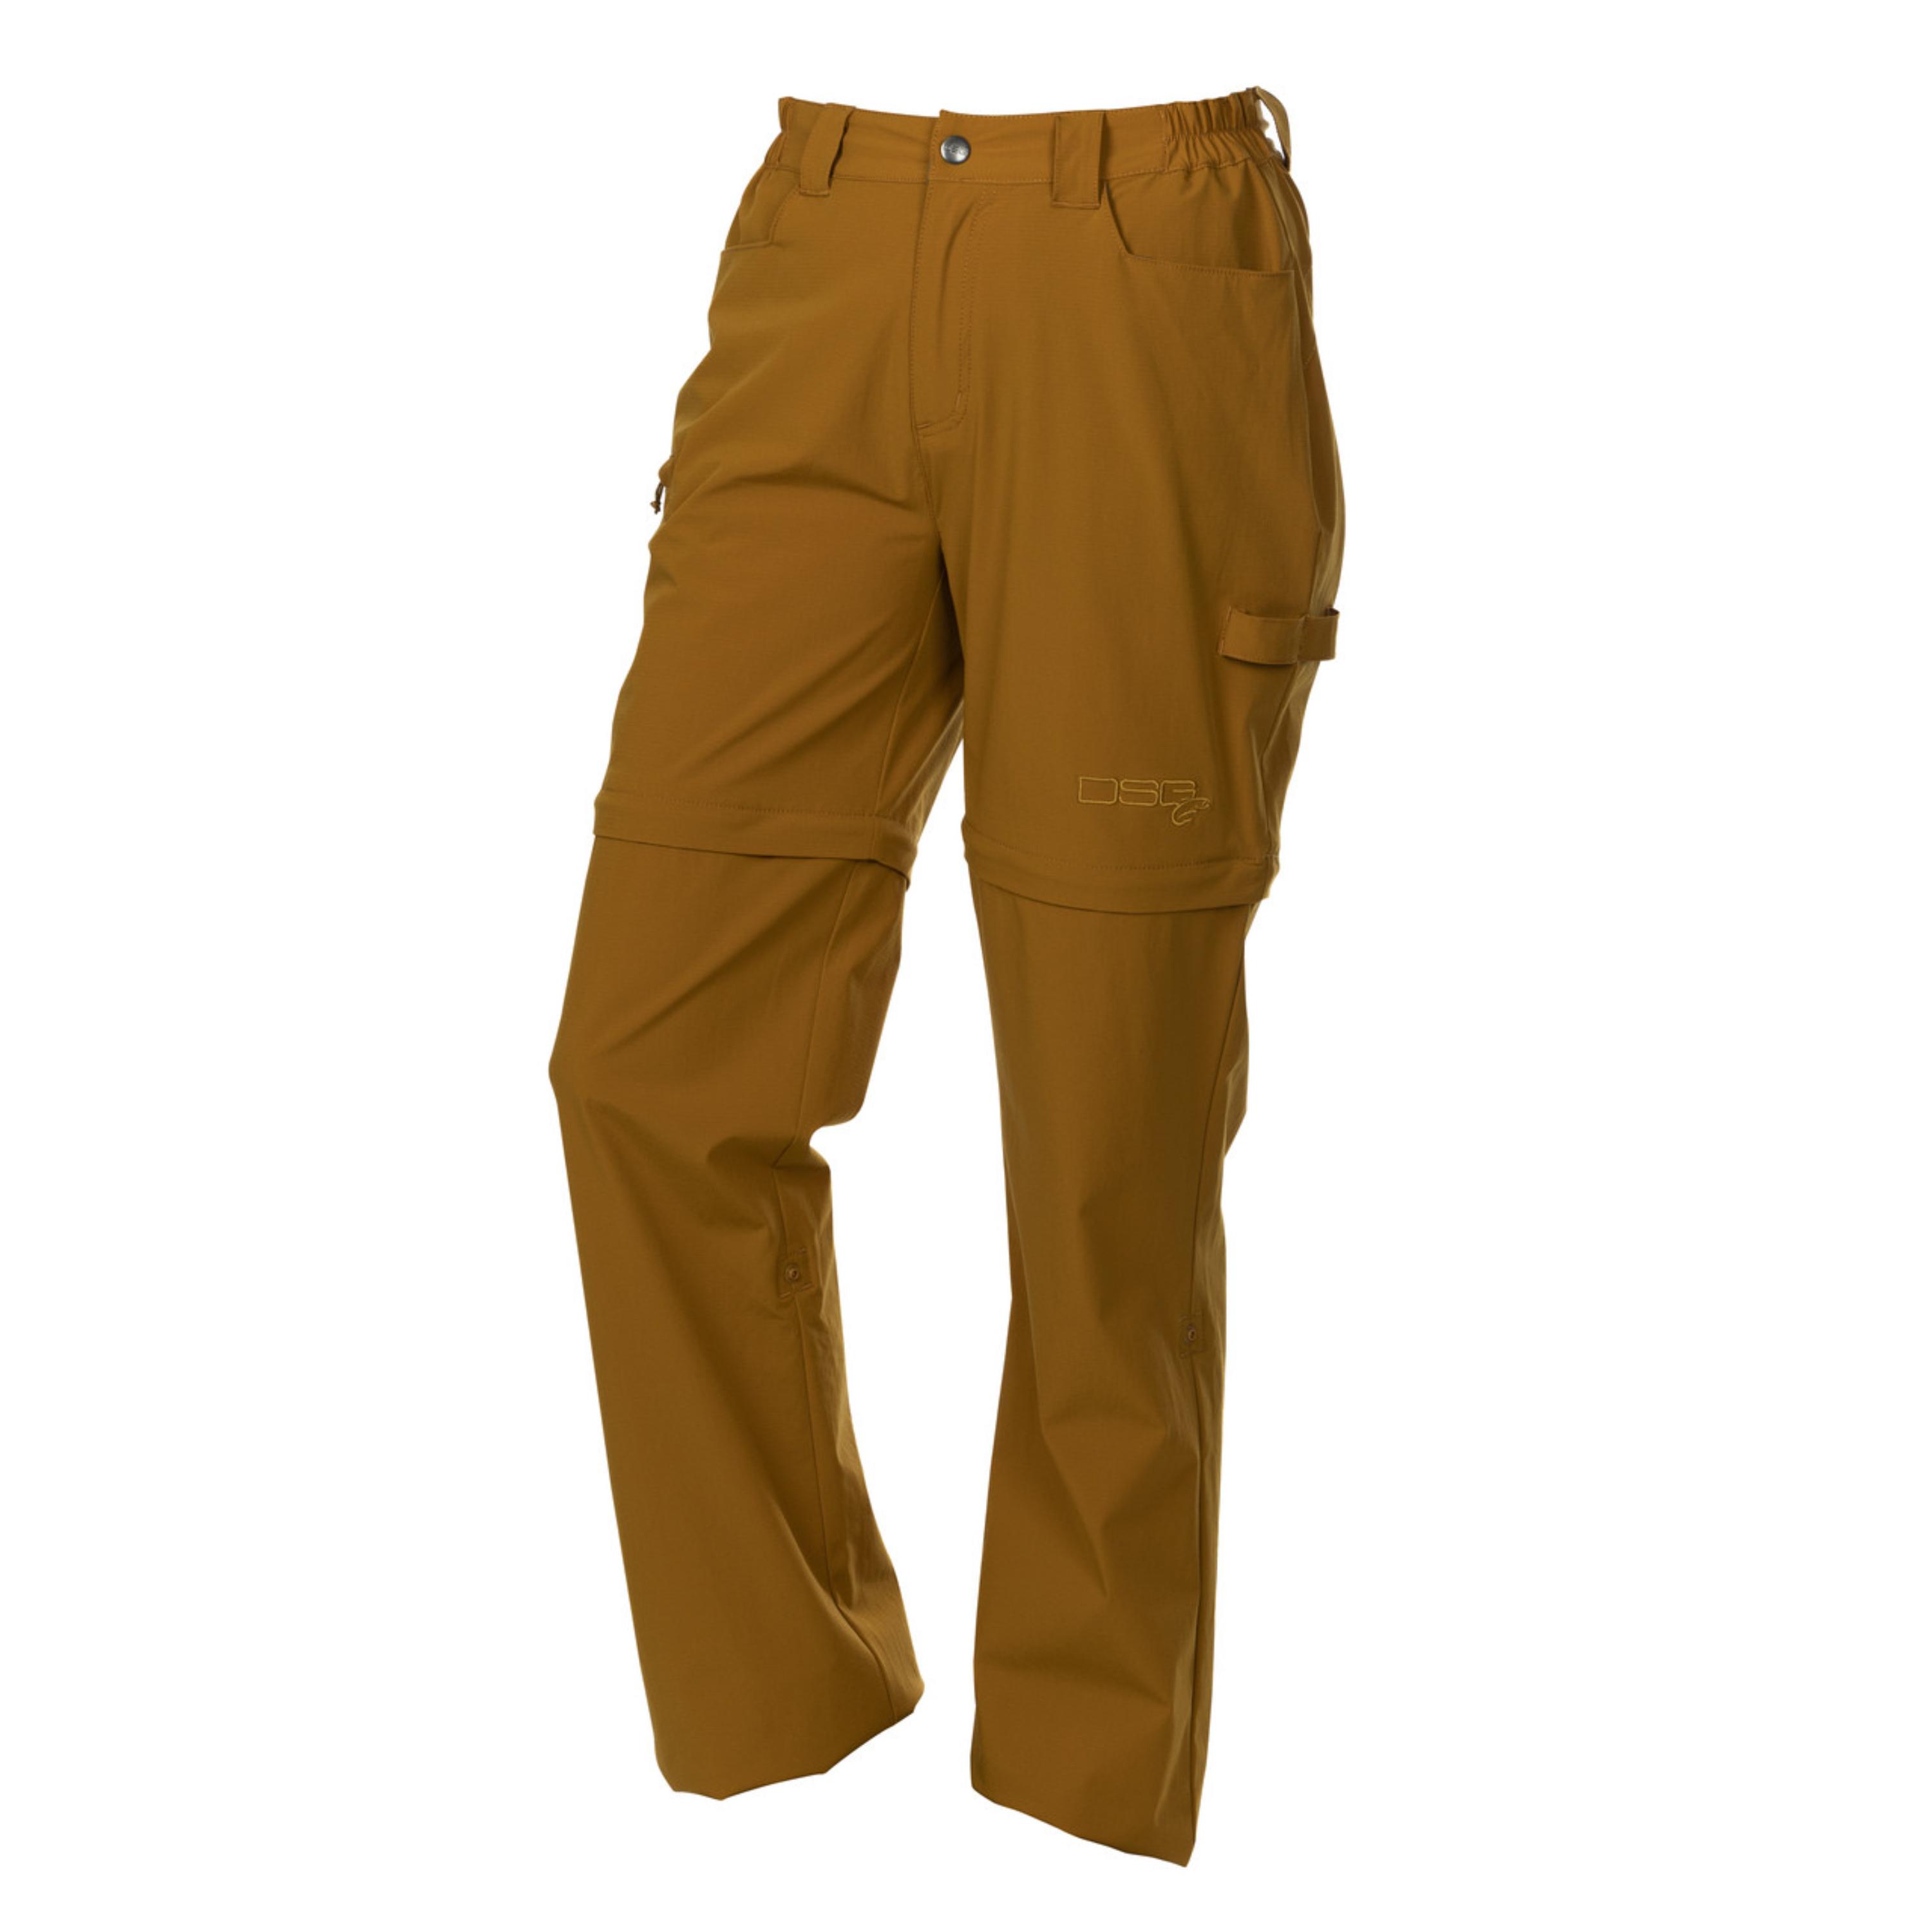 Buy Men's Outdoor Quick Dry Convertible Lightweight Hiking Fishing Zip Off  Cargo Work Pants Trousers Grey at Amazon.in